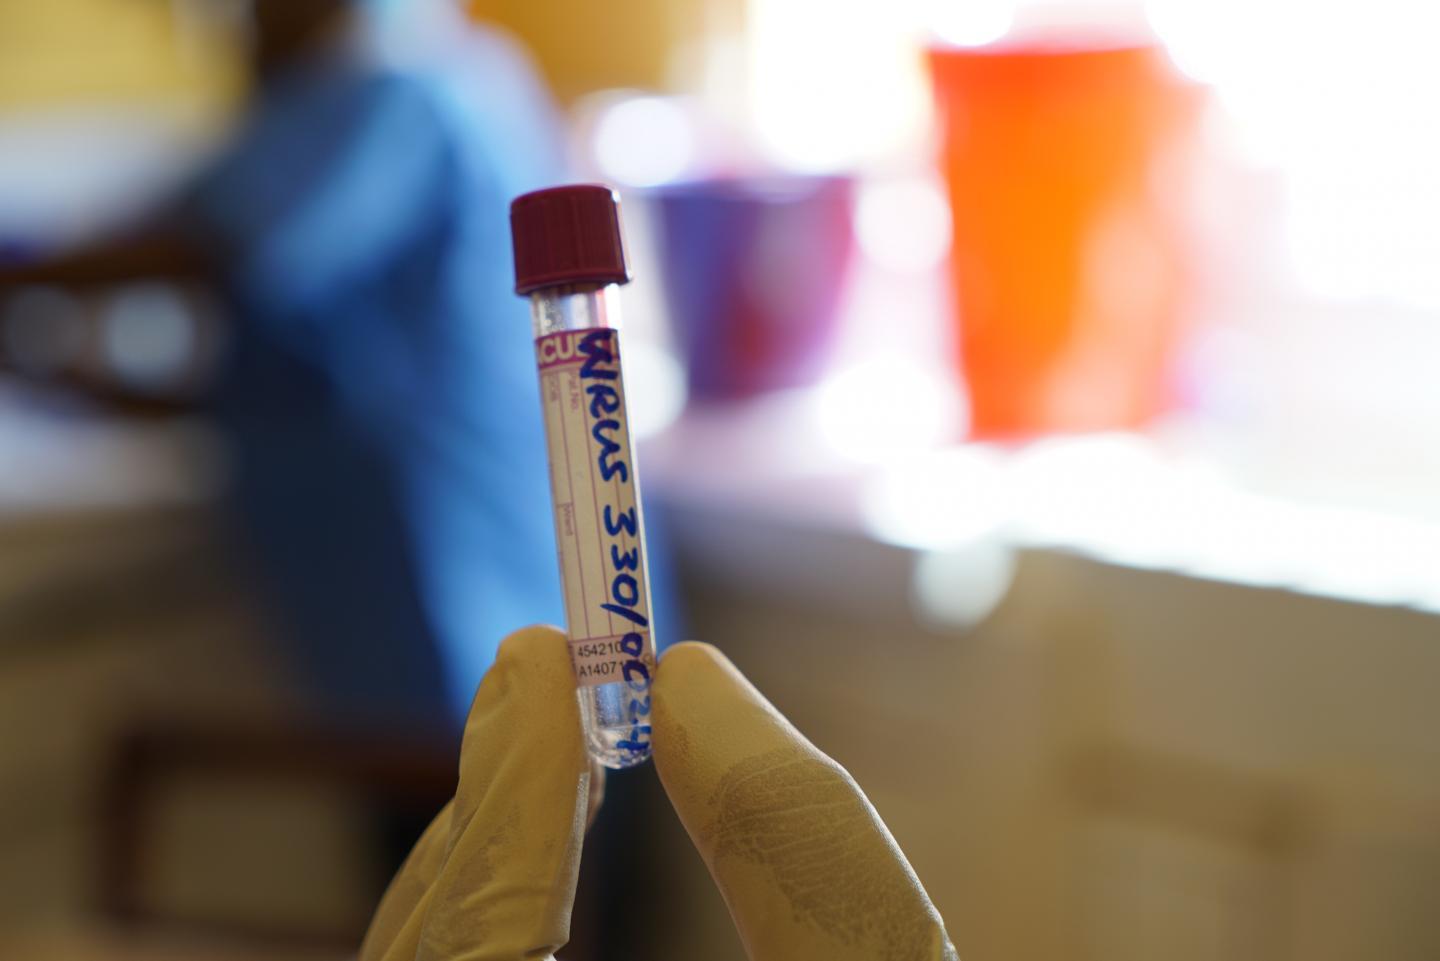 Ebola blood vial